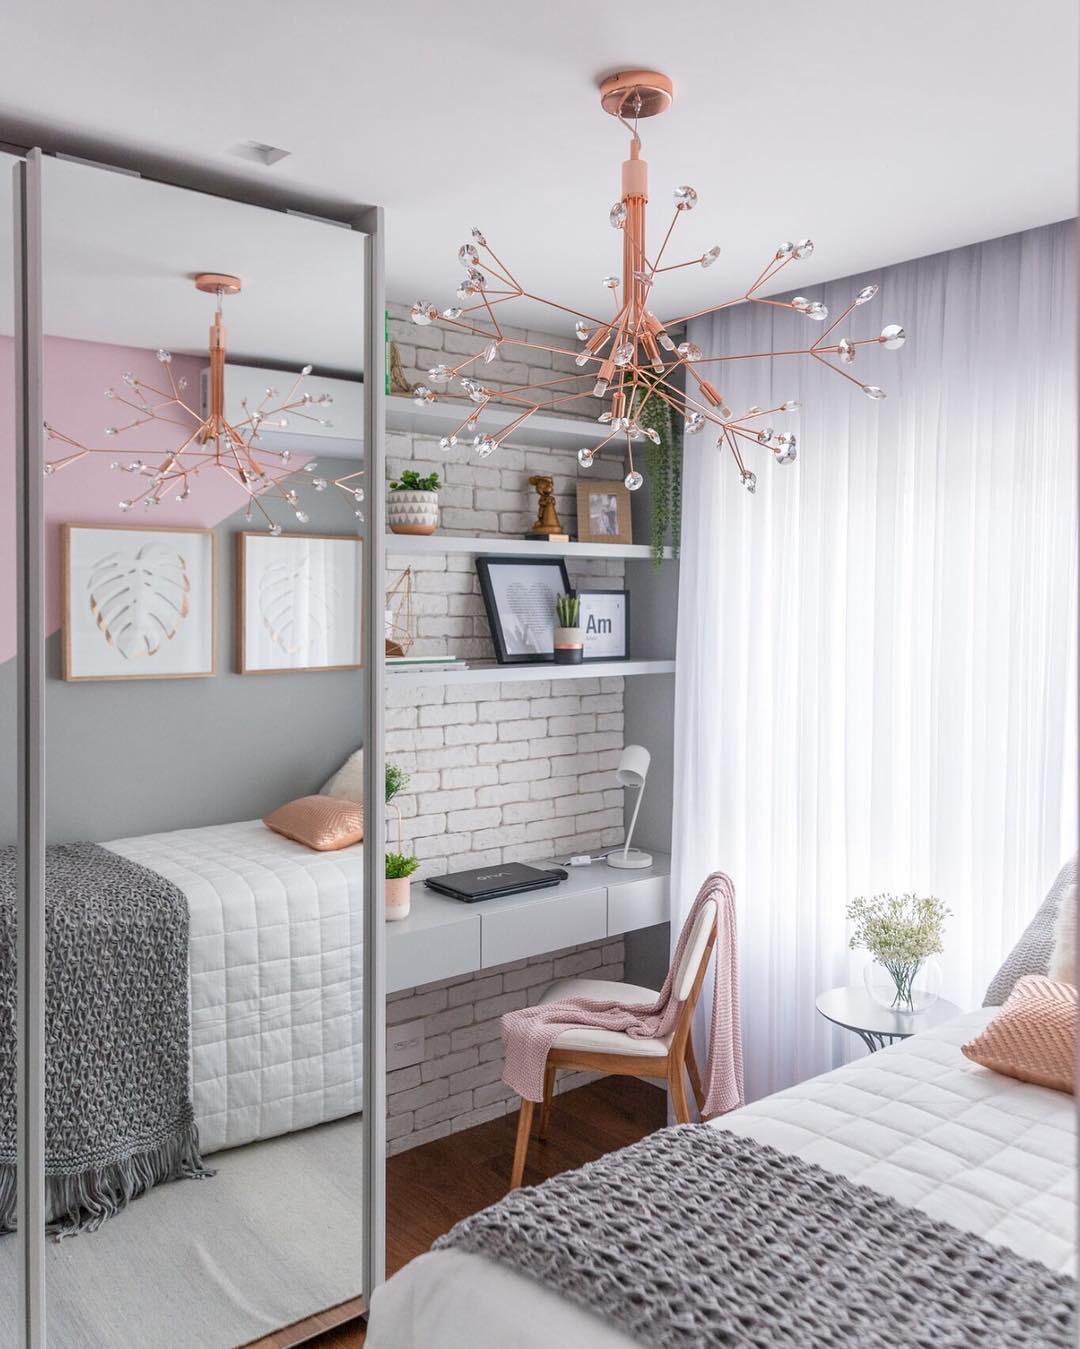 6 ide dekor untuk kamar tidur kecil casa indonesia 4